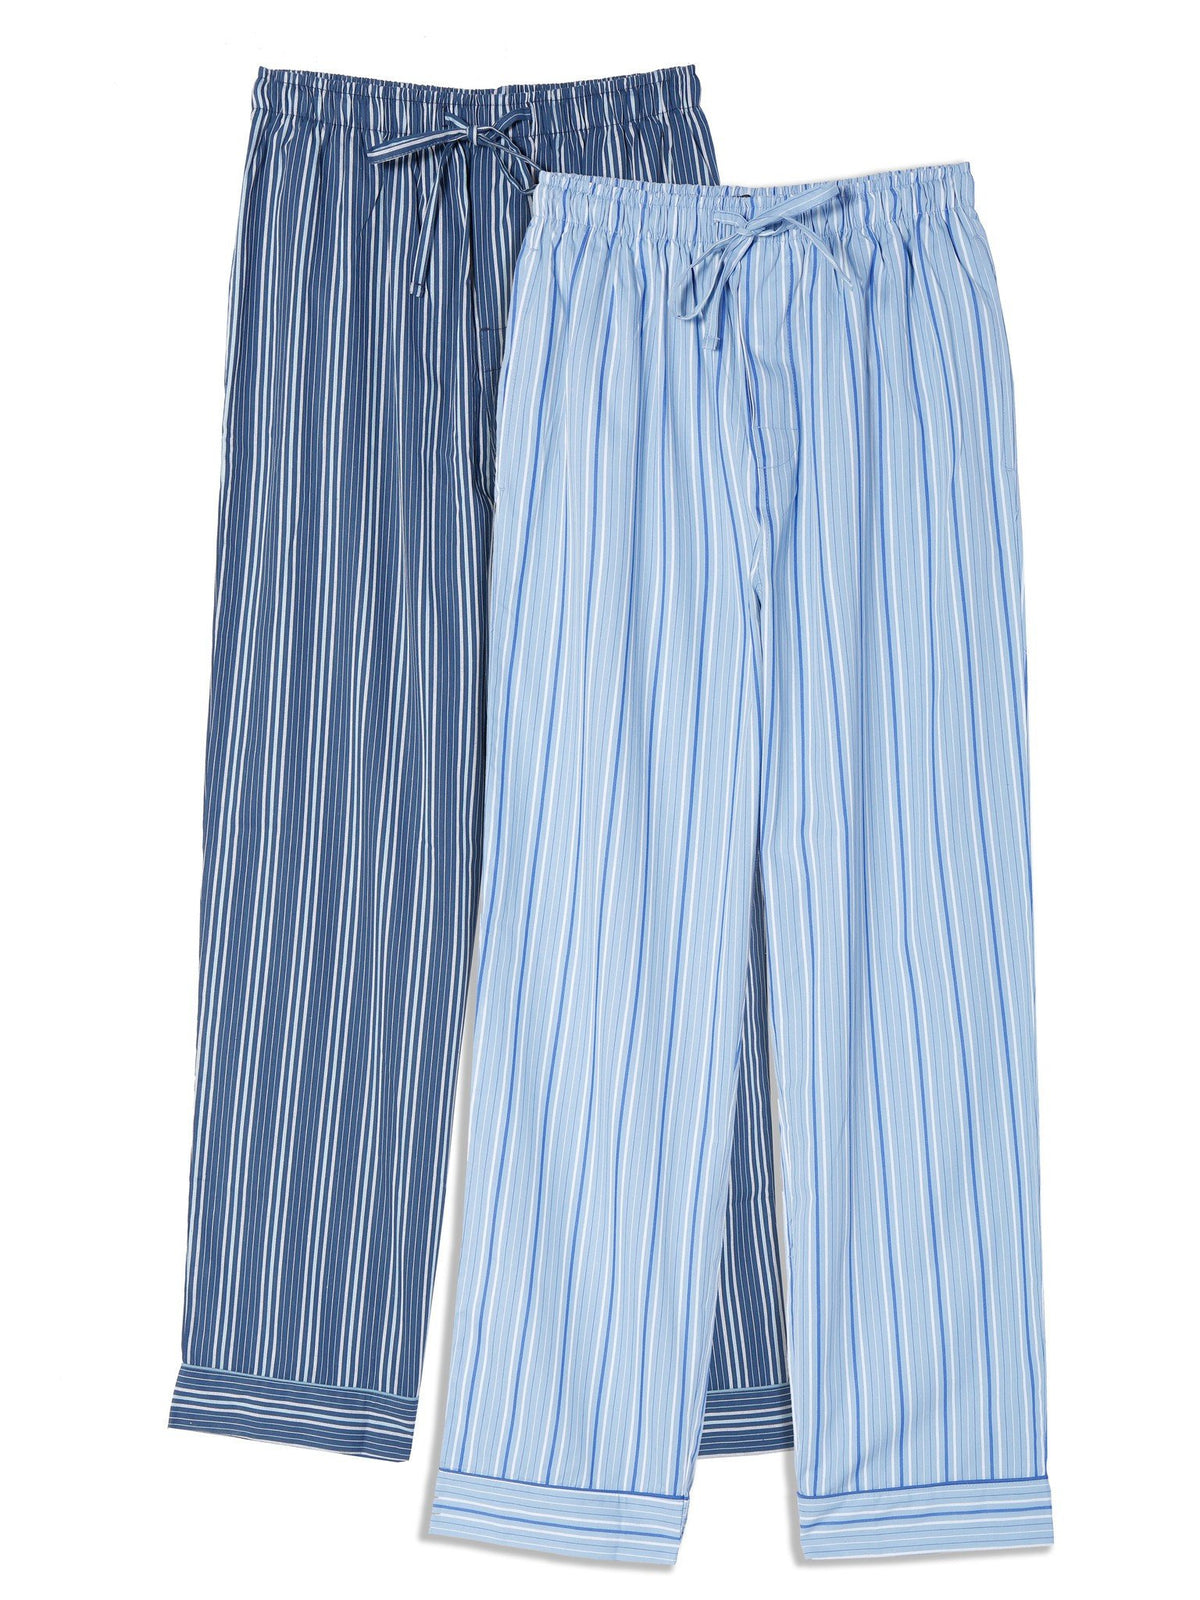 Men's Premium Cotton Lounge/Sleep Pants - 2 Pack - 2-Pack (Stripes Blue Pack)